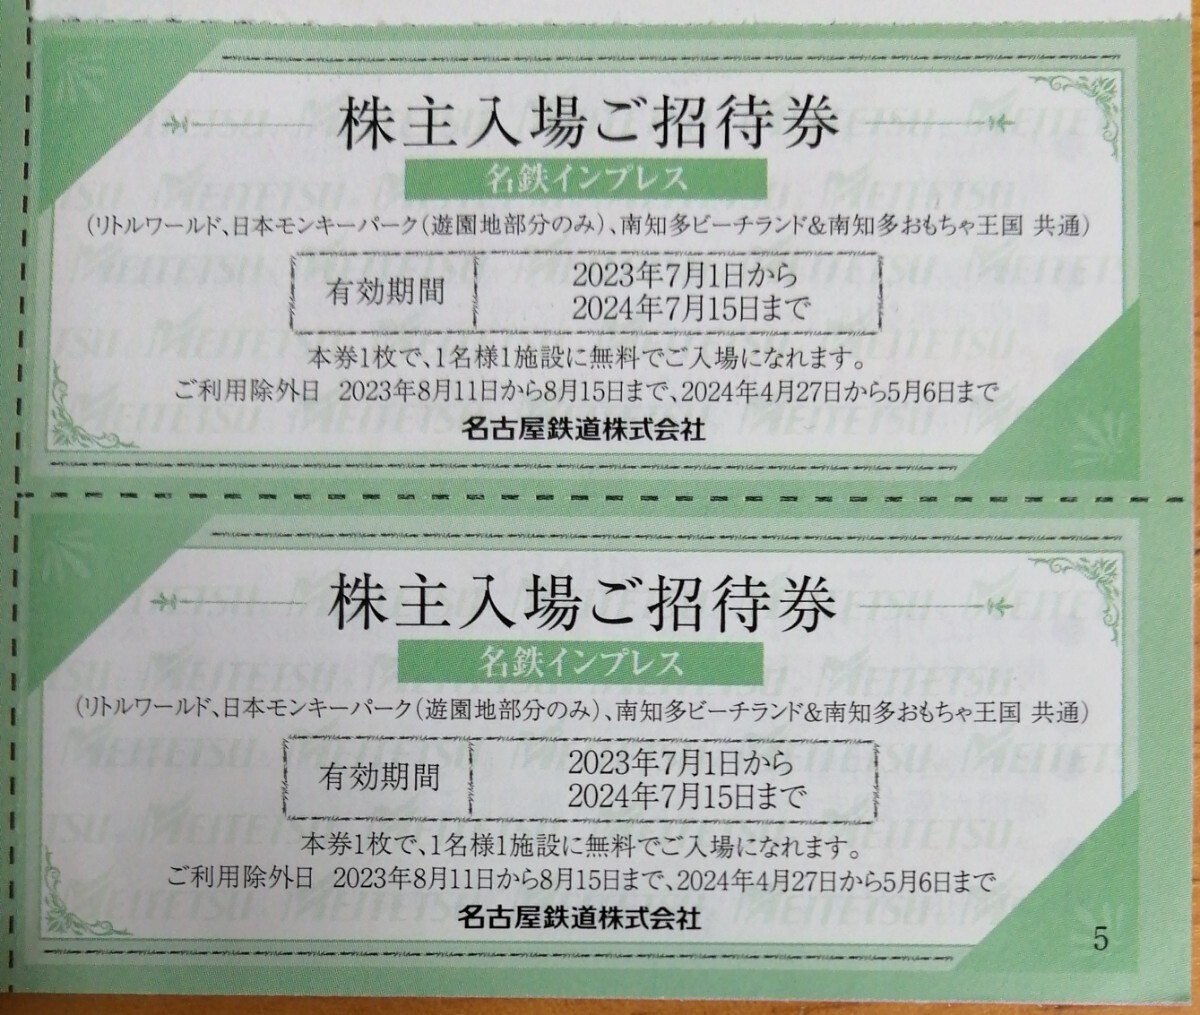  name iron Impress stockholder hospitality admission ticket (. complimentary ticket )2 sheets south . many beach Land little world Japan Monkey park 